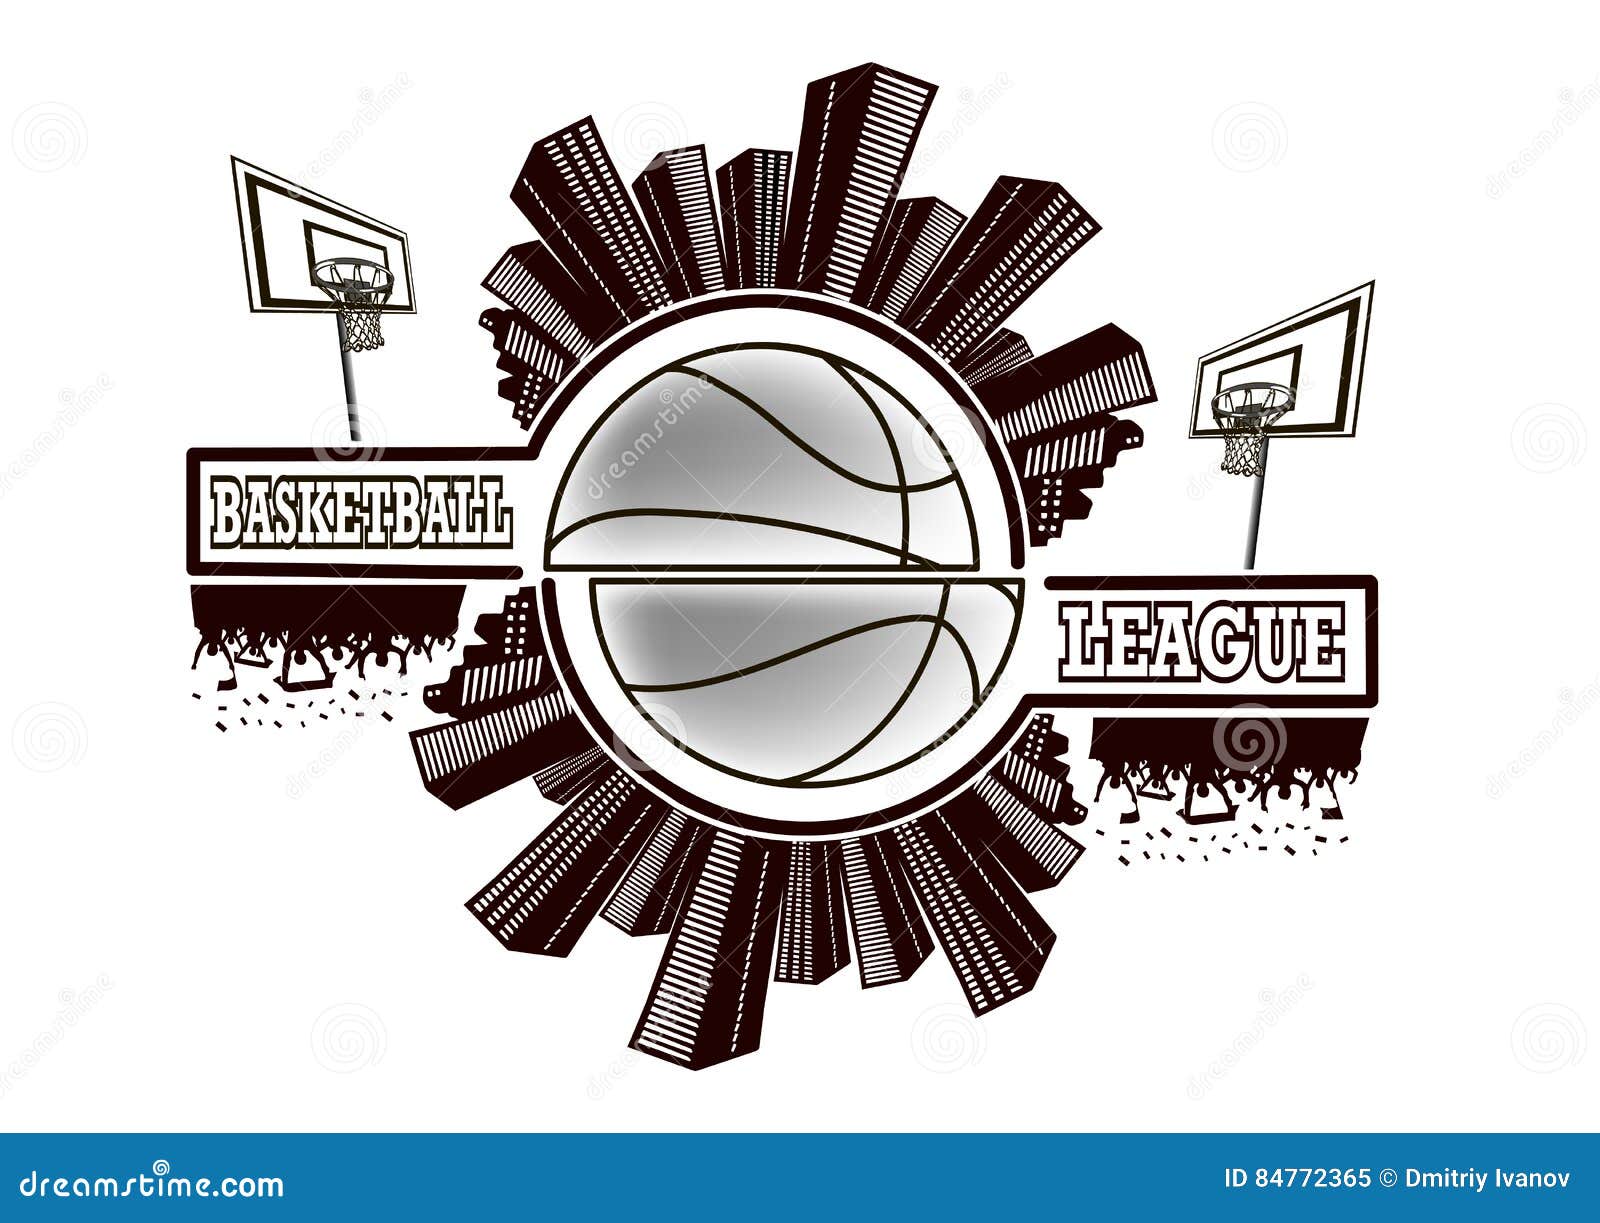 Logo basketball league stock vector. Illustration of graffiti - 84772365